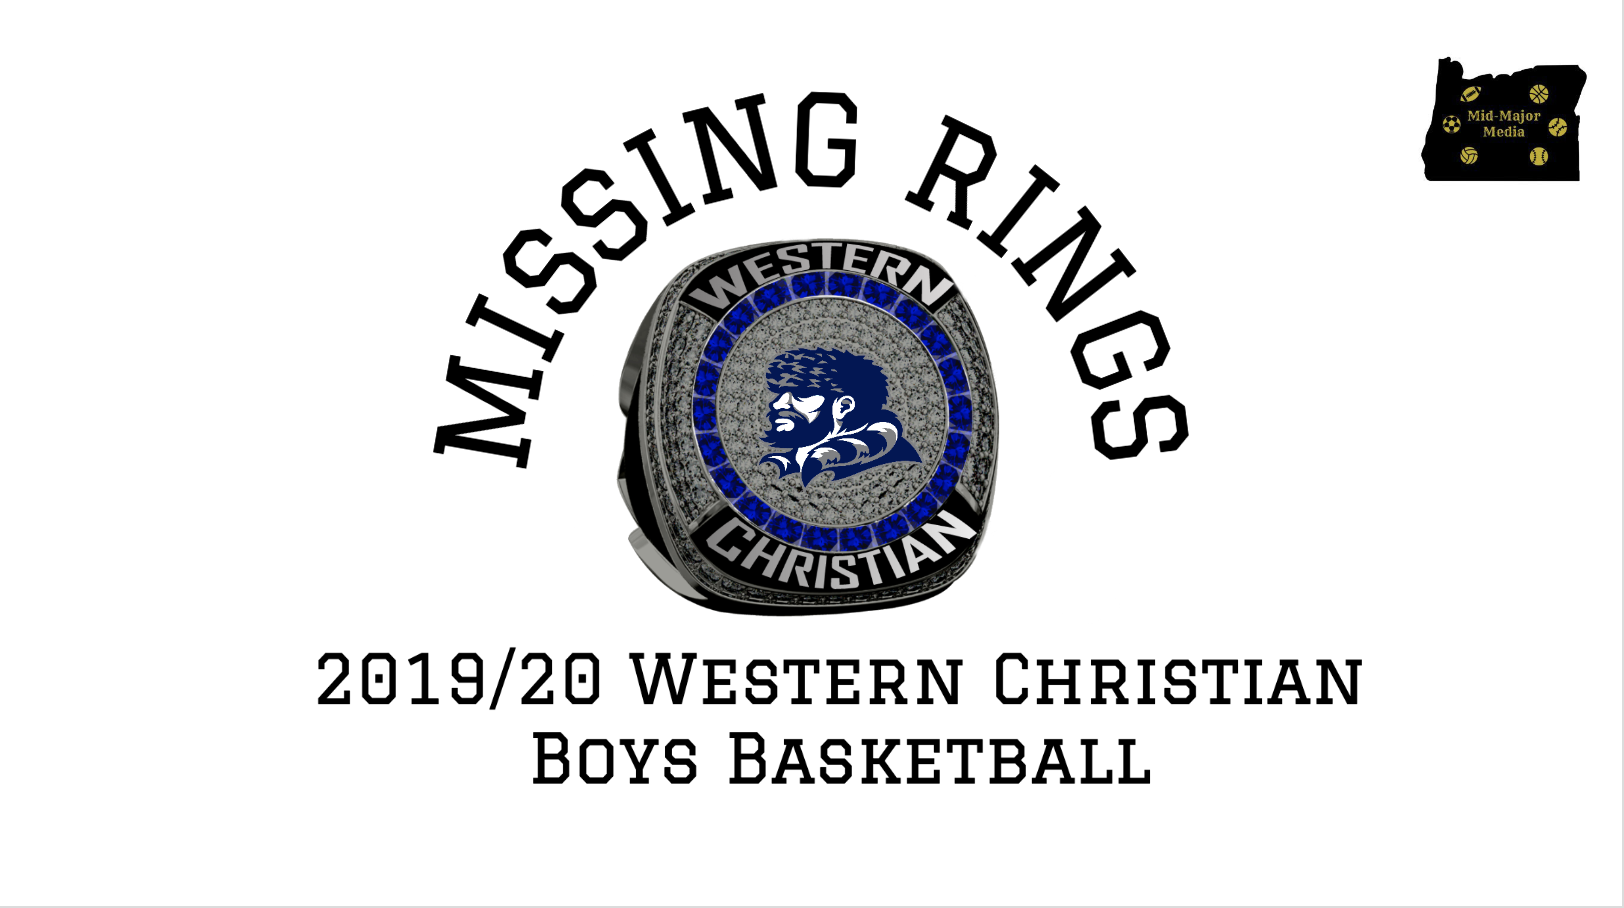 Missing Rings 1.1: What Makes Western, Western